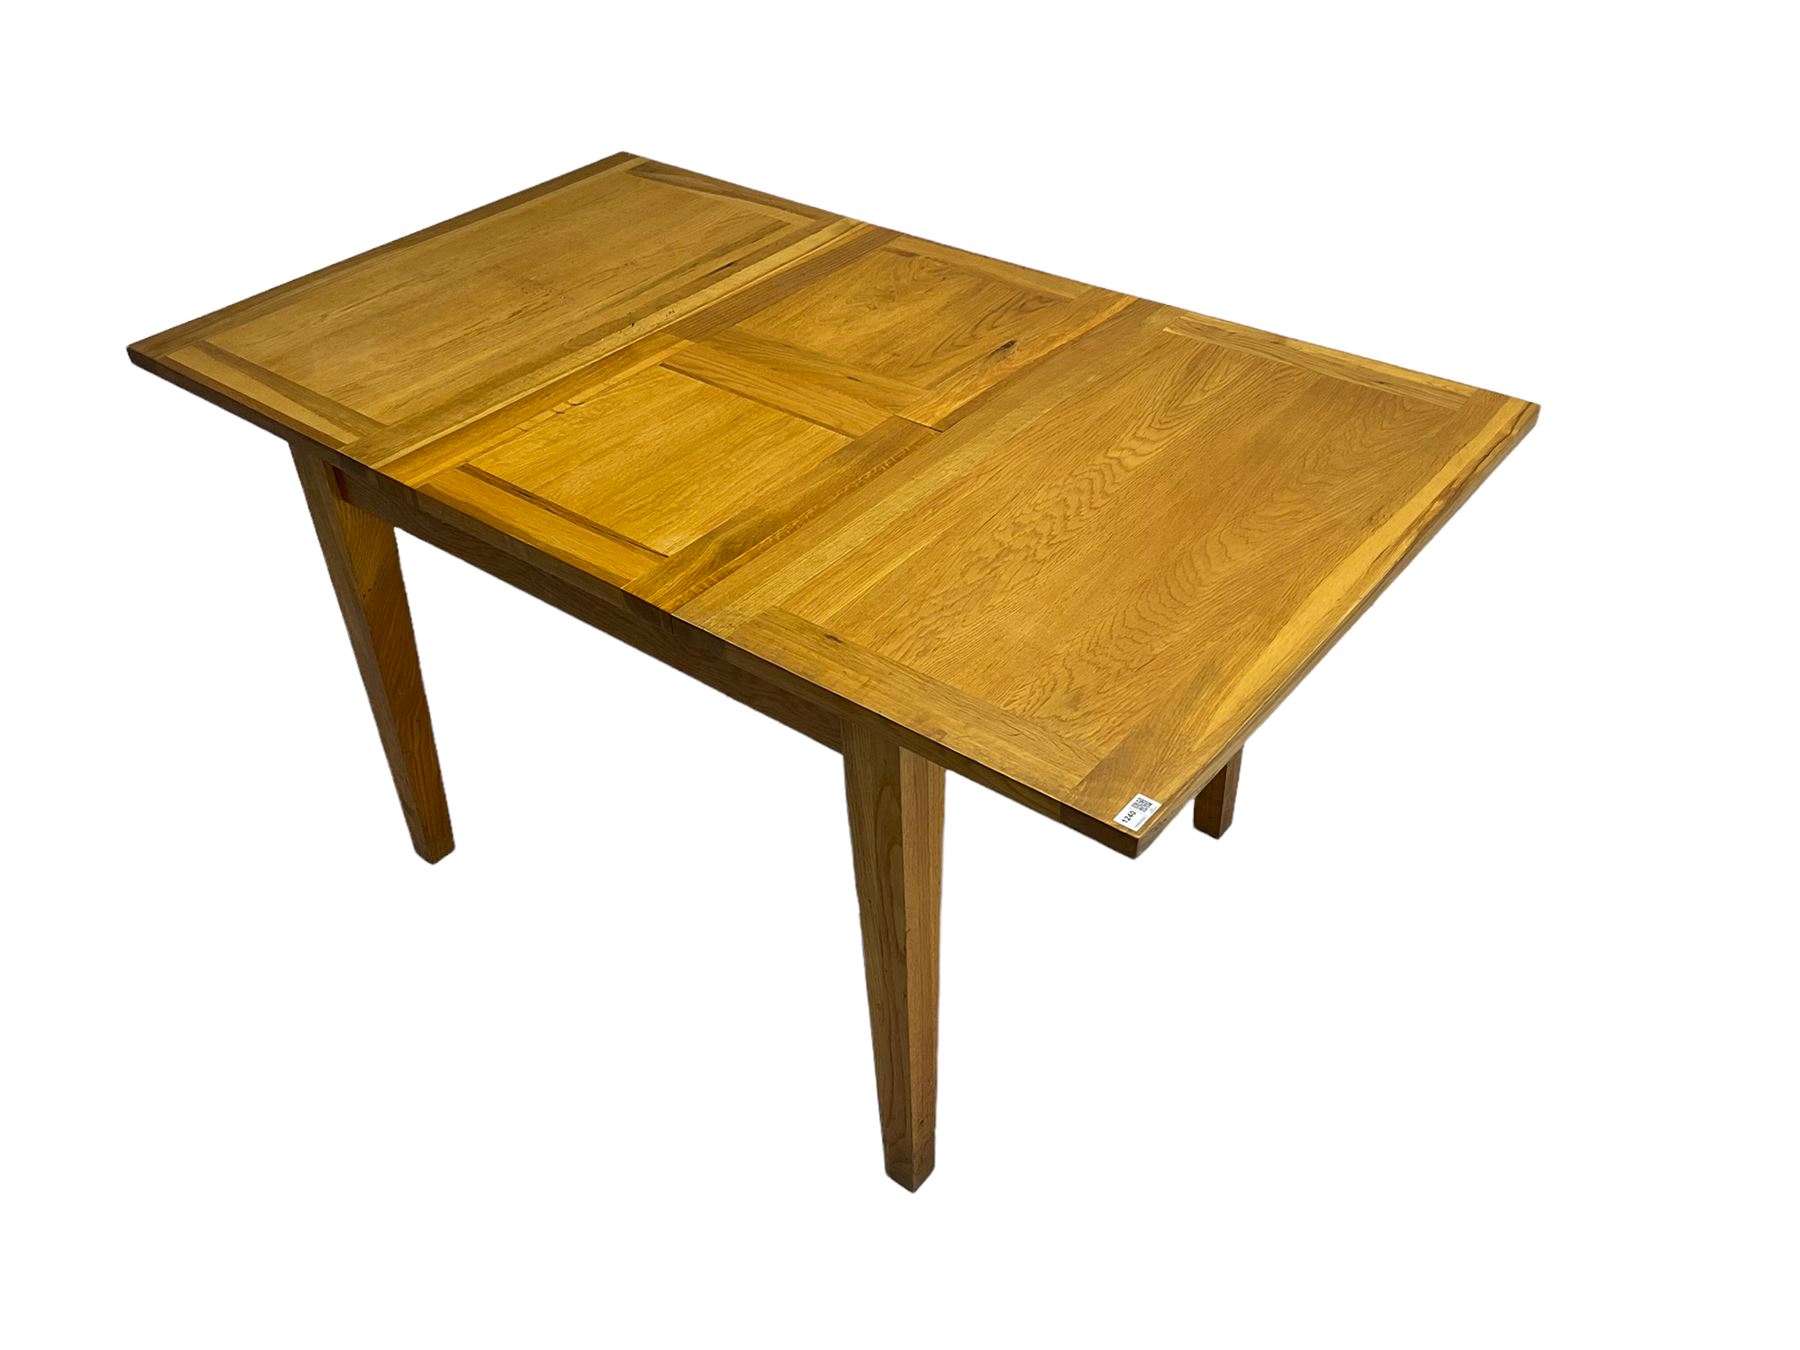 Light oak extending dining table - Image 3 of 7